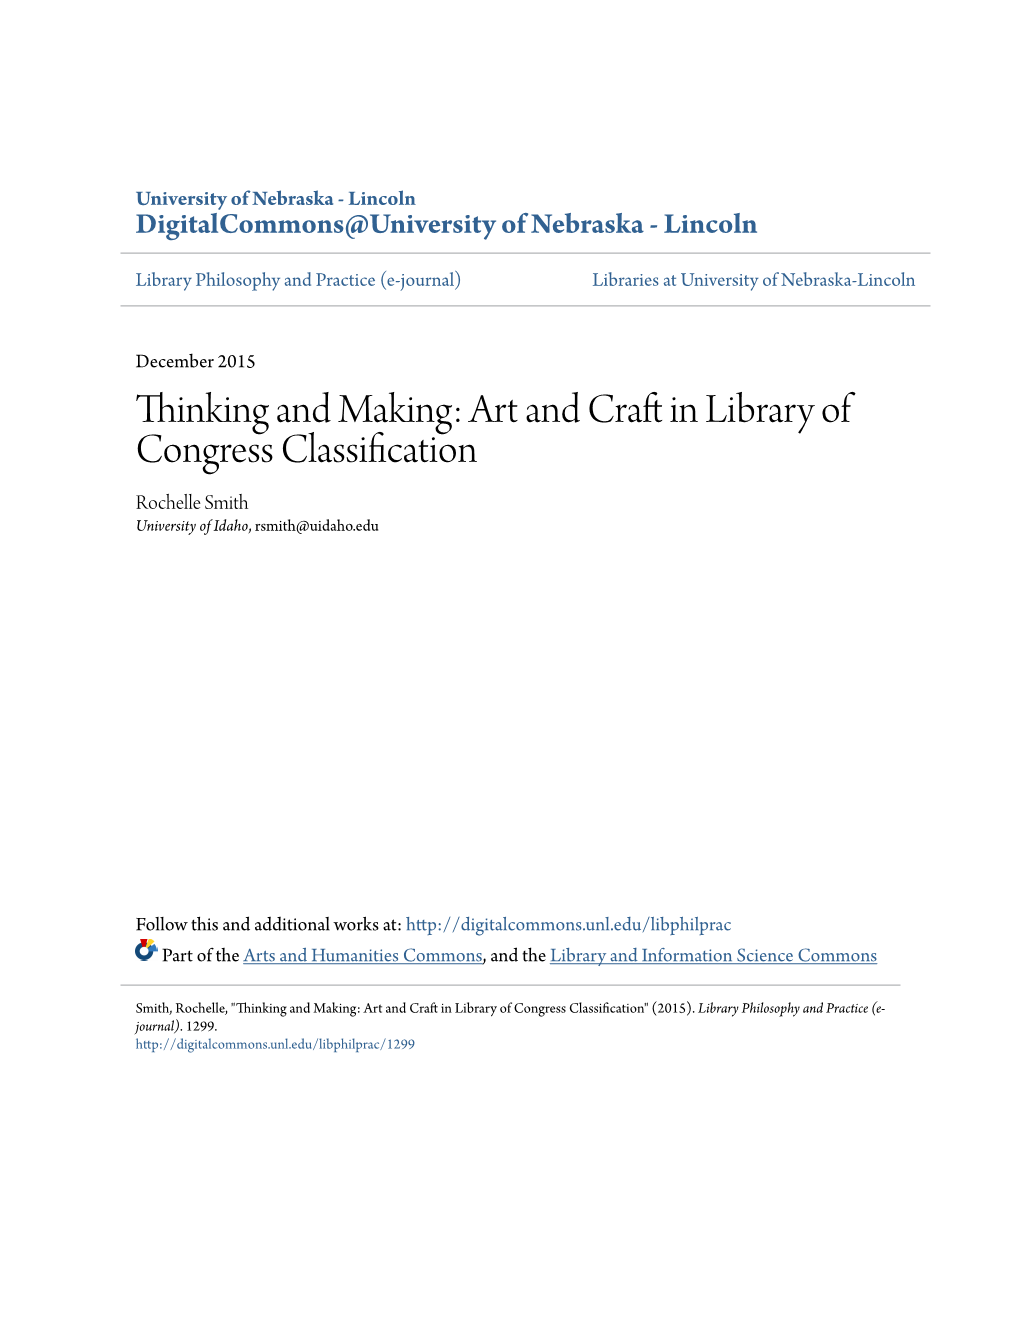 Art and Craft in Library of Congress Classification Rochelle Smith University of Idaho, Rsmith@Uidaho.Edu